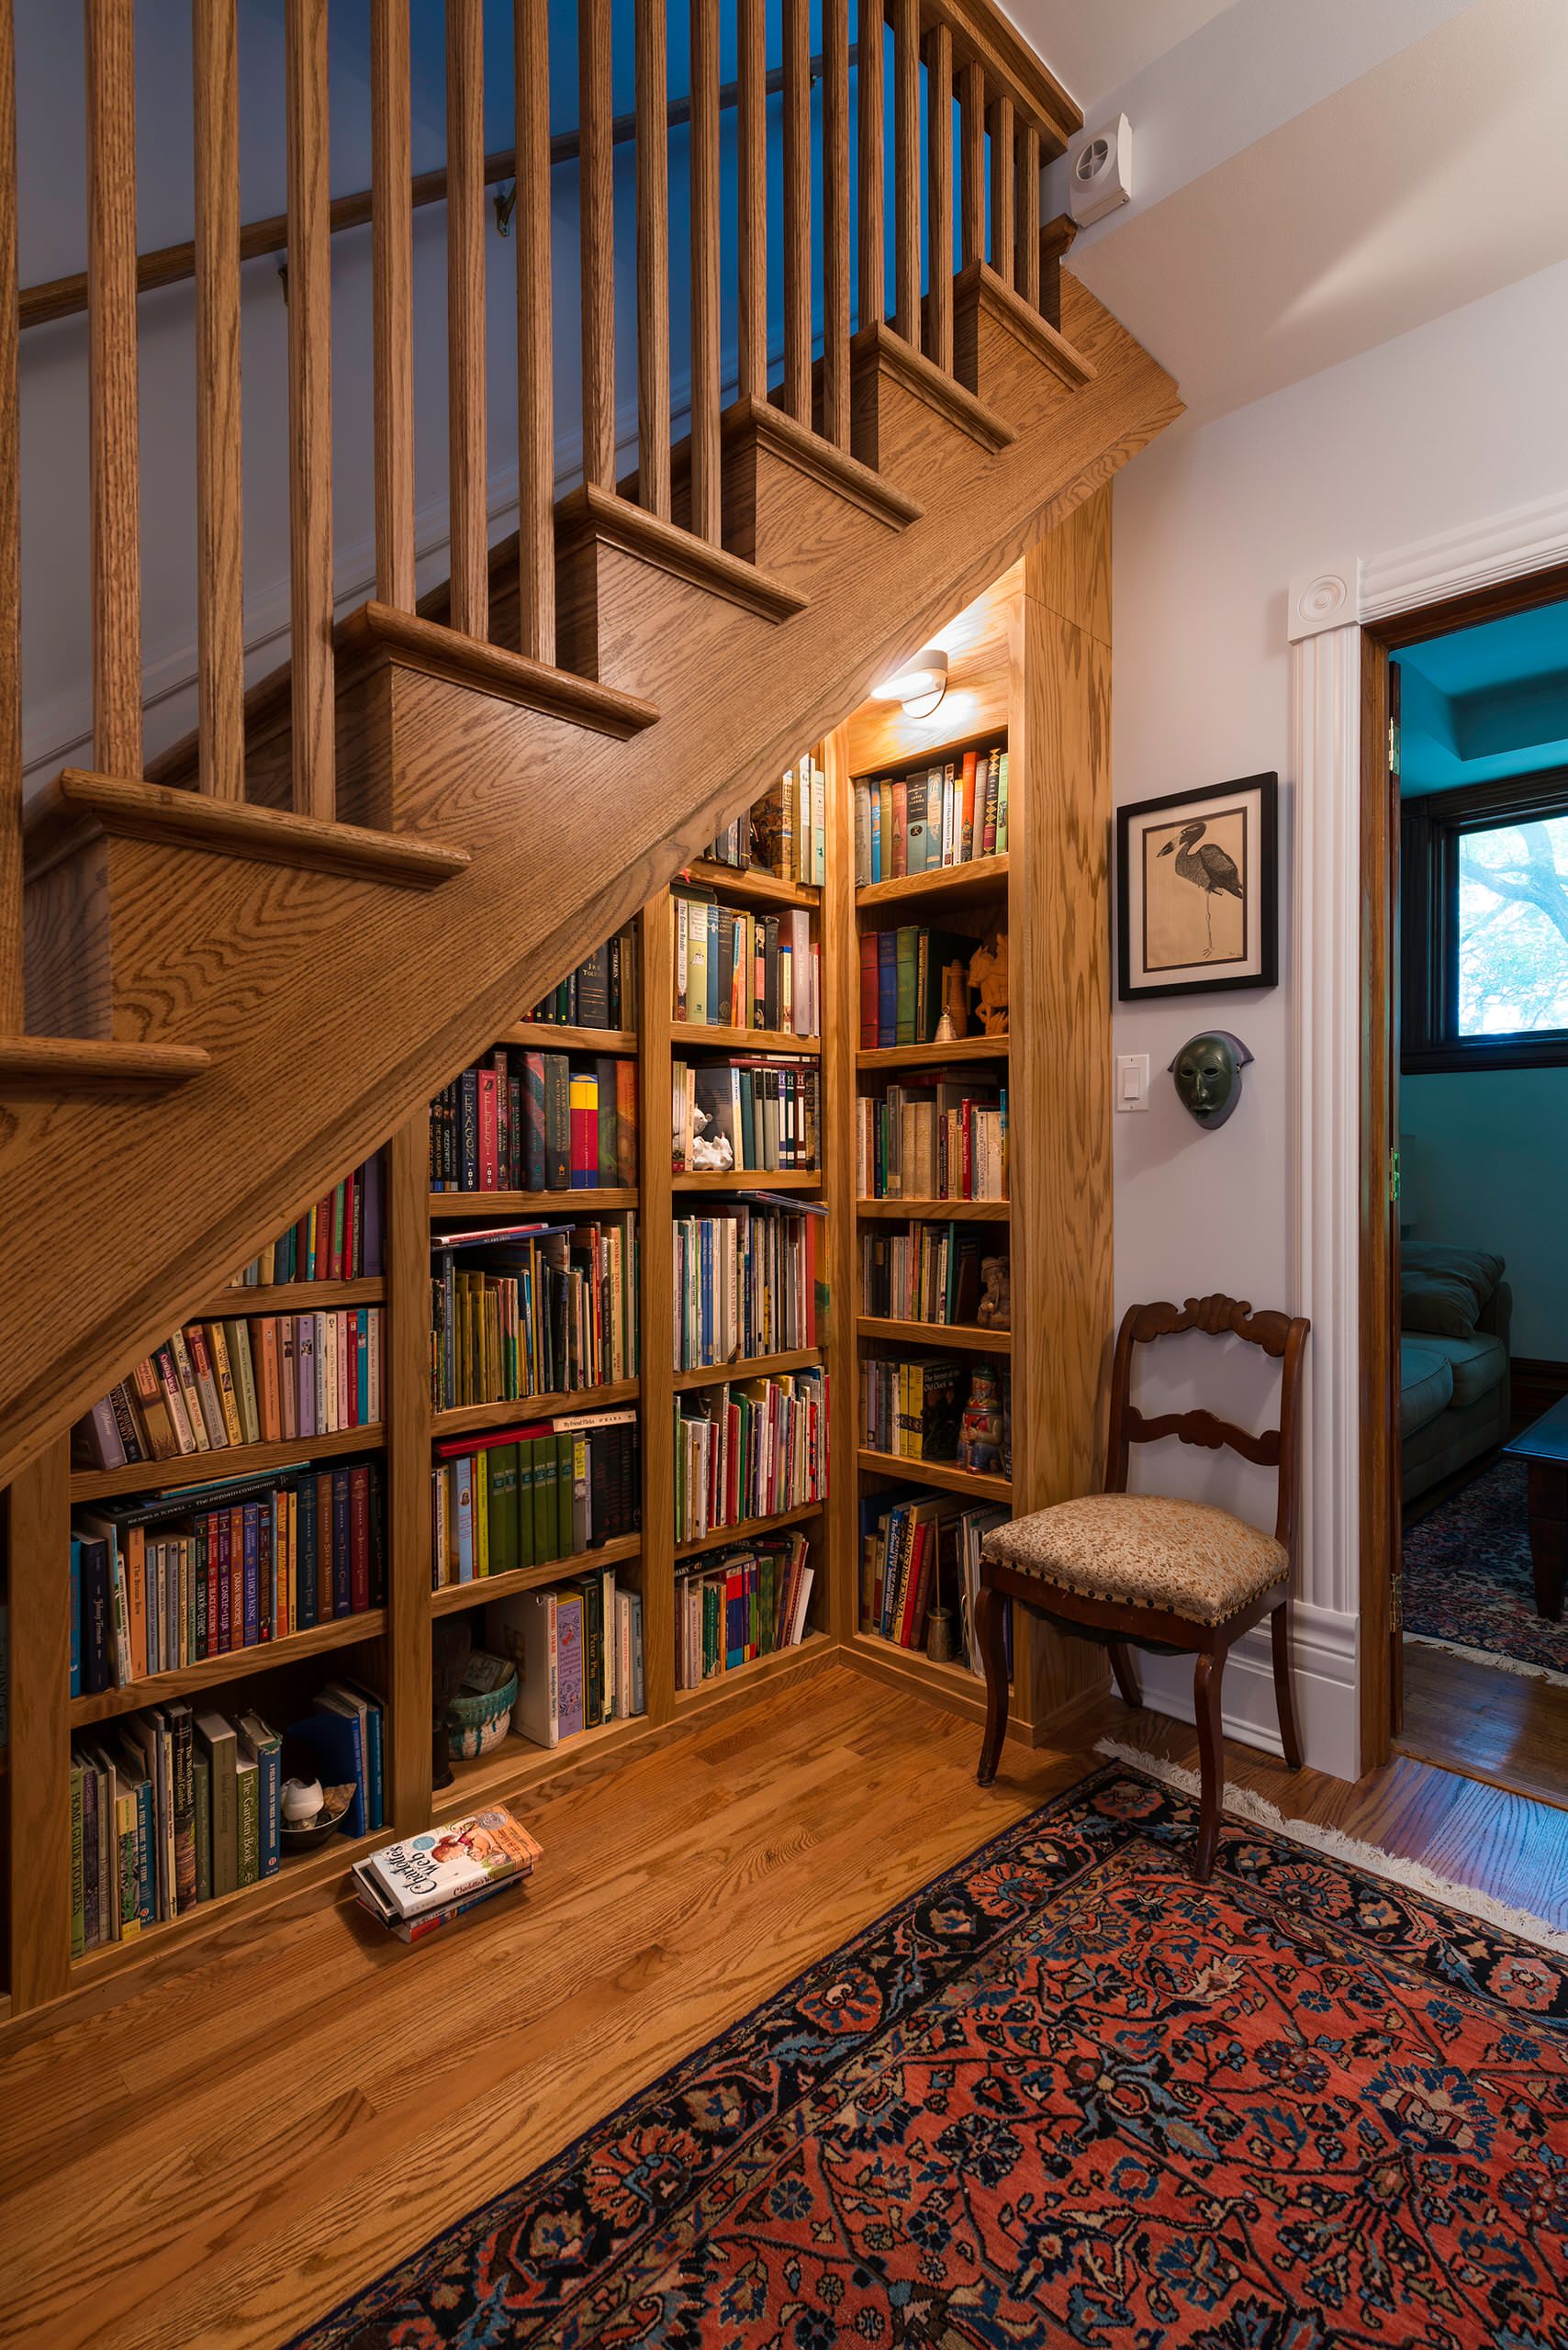 Built In Bookshelves Under Stairs - Photos & Ideas | Houzz